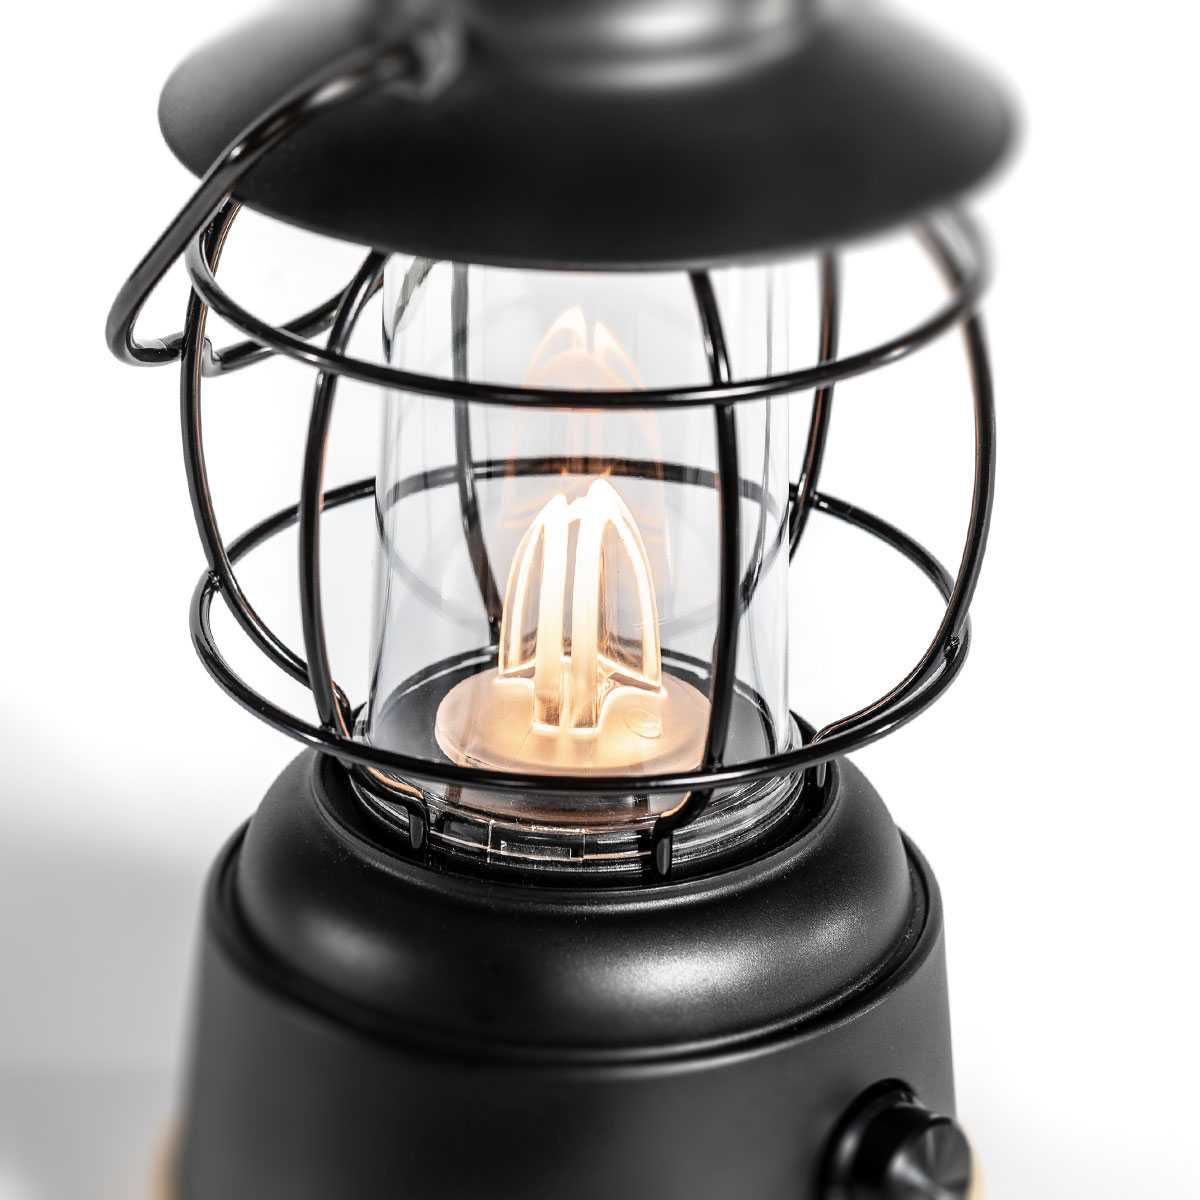 VICKYWOOD WOODY Lantern Campinglampe dimmbar - VW-LT-01